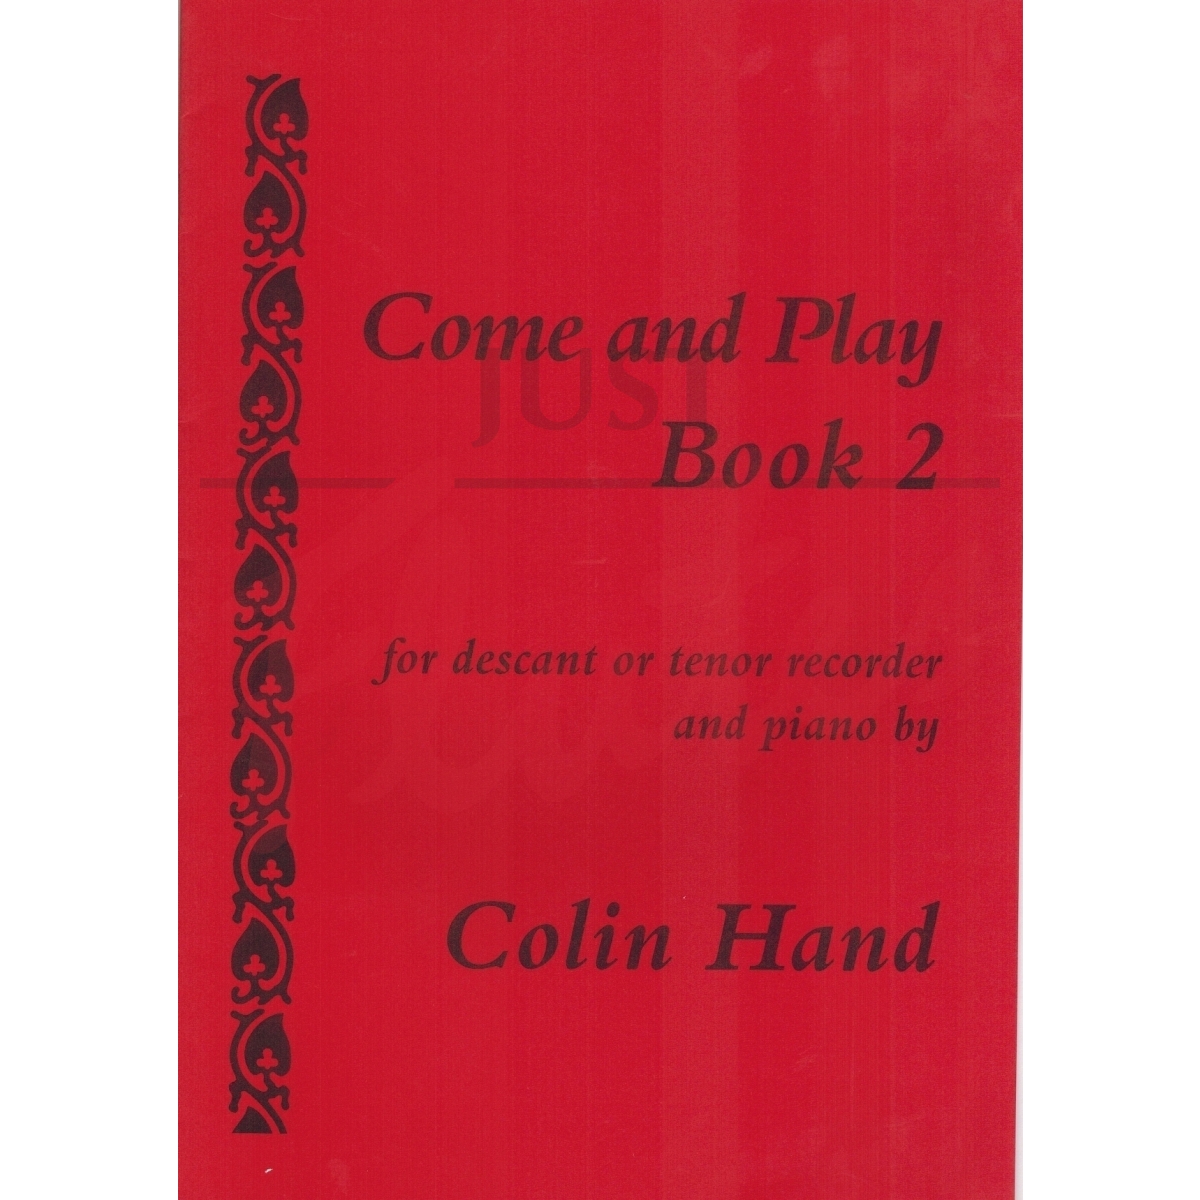 Come and Play Book 2 [Descant/Tenor Recorder]